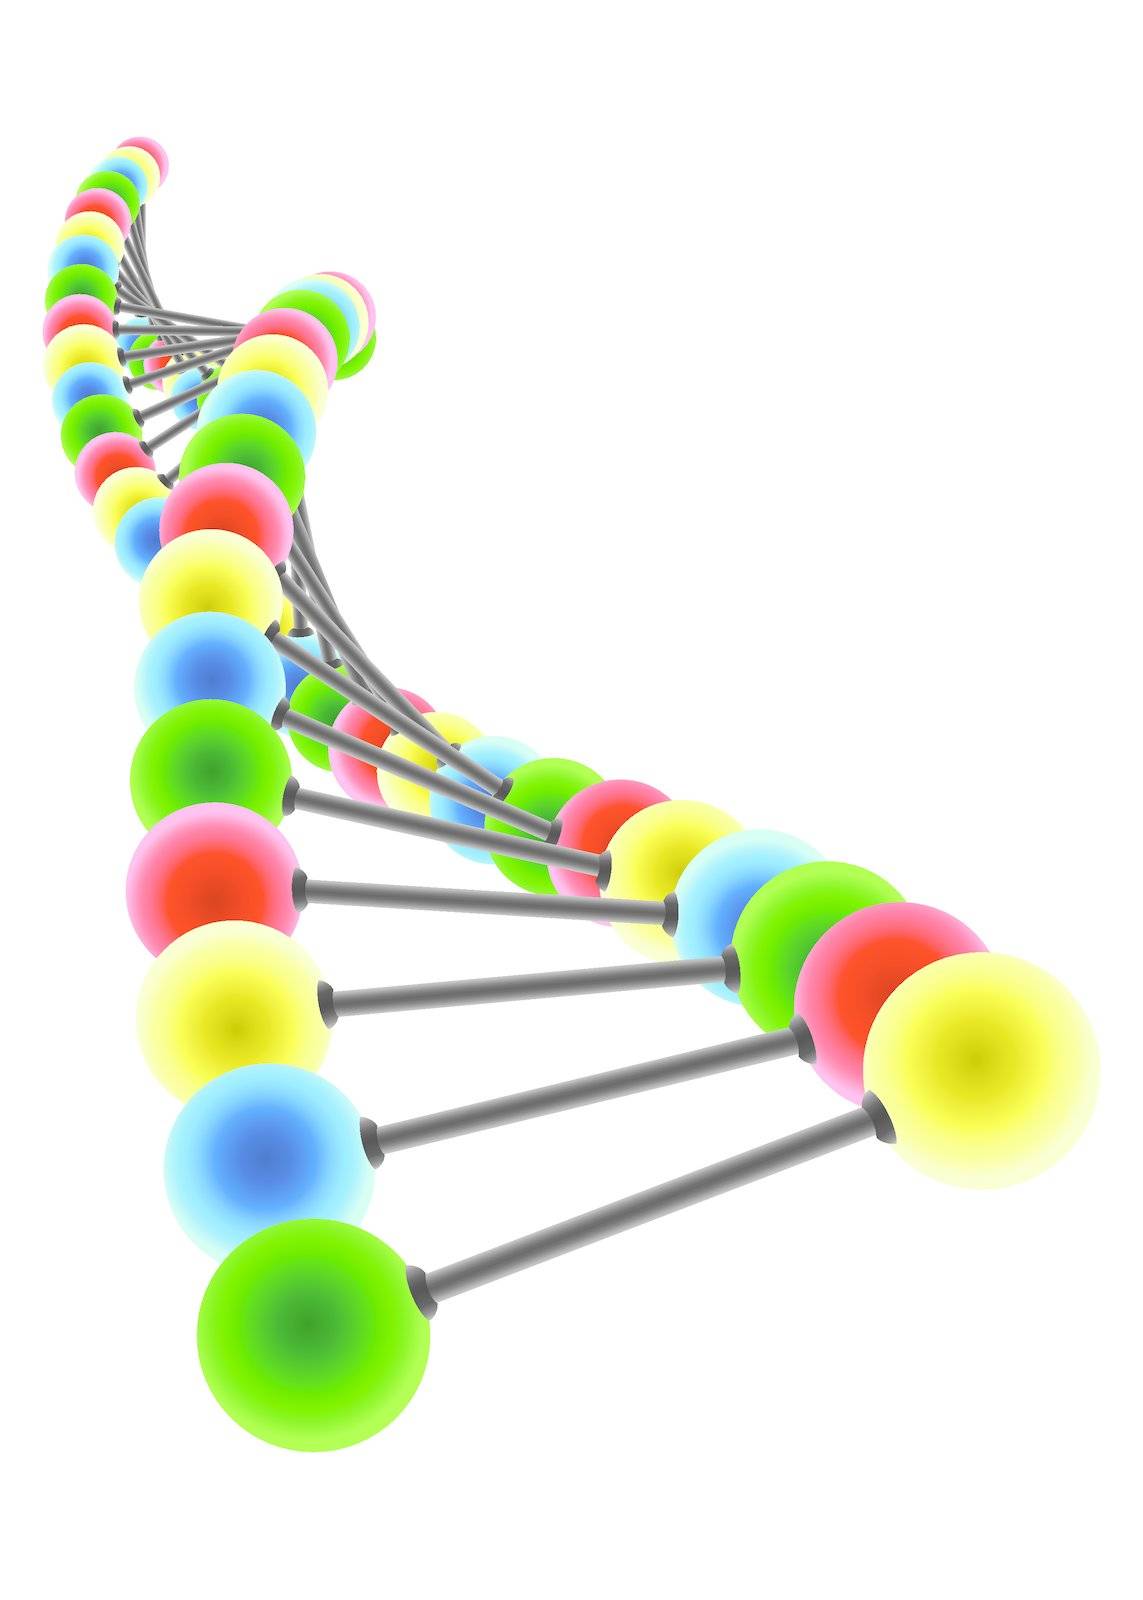 DNA model by Neokryuger